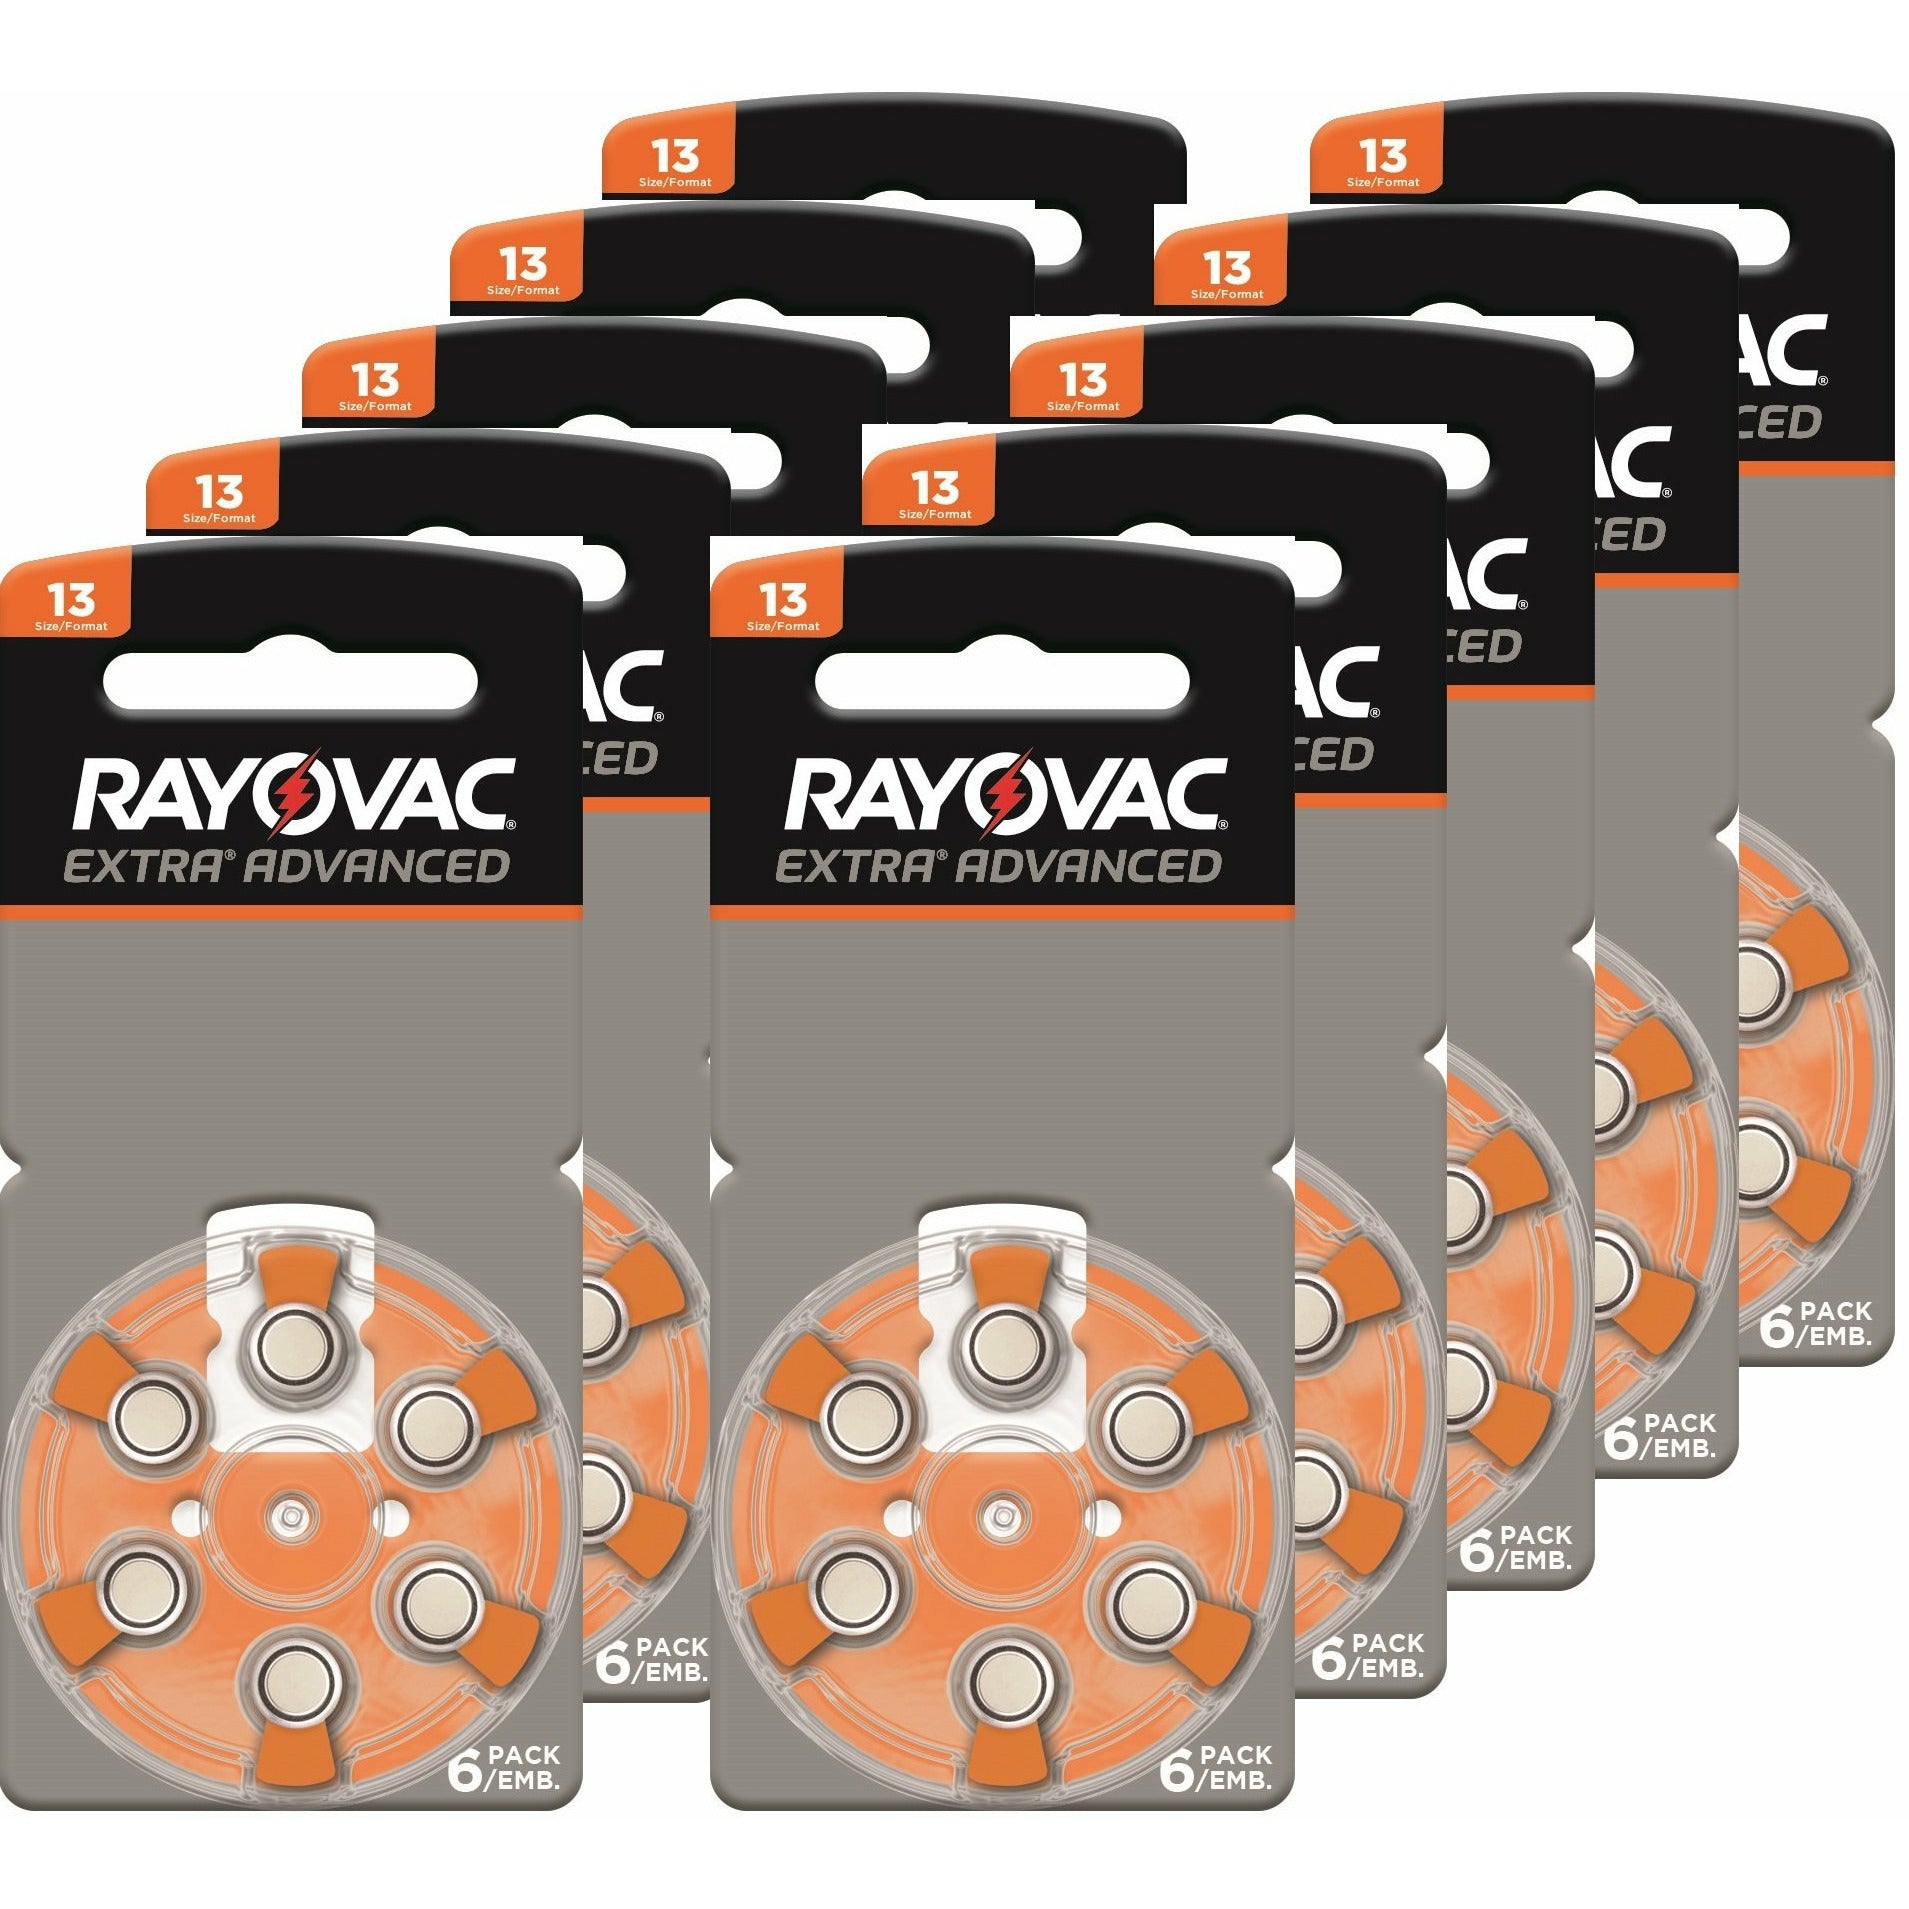 Size 312 Hearing Aid Batteries - Rayovac